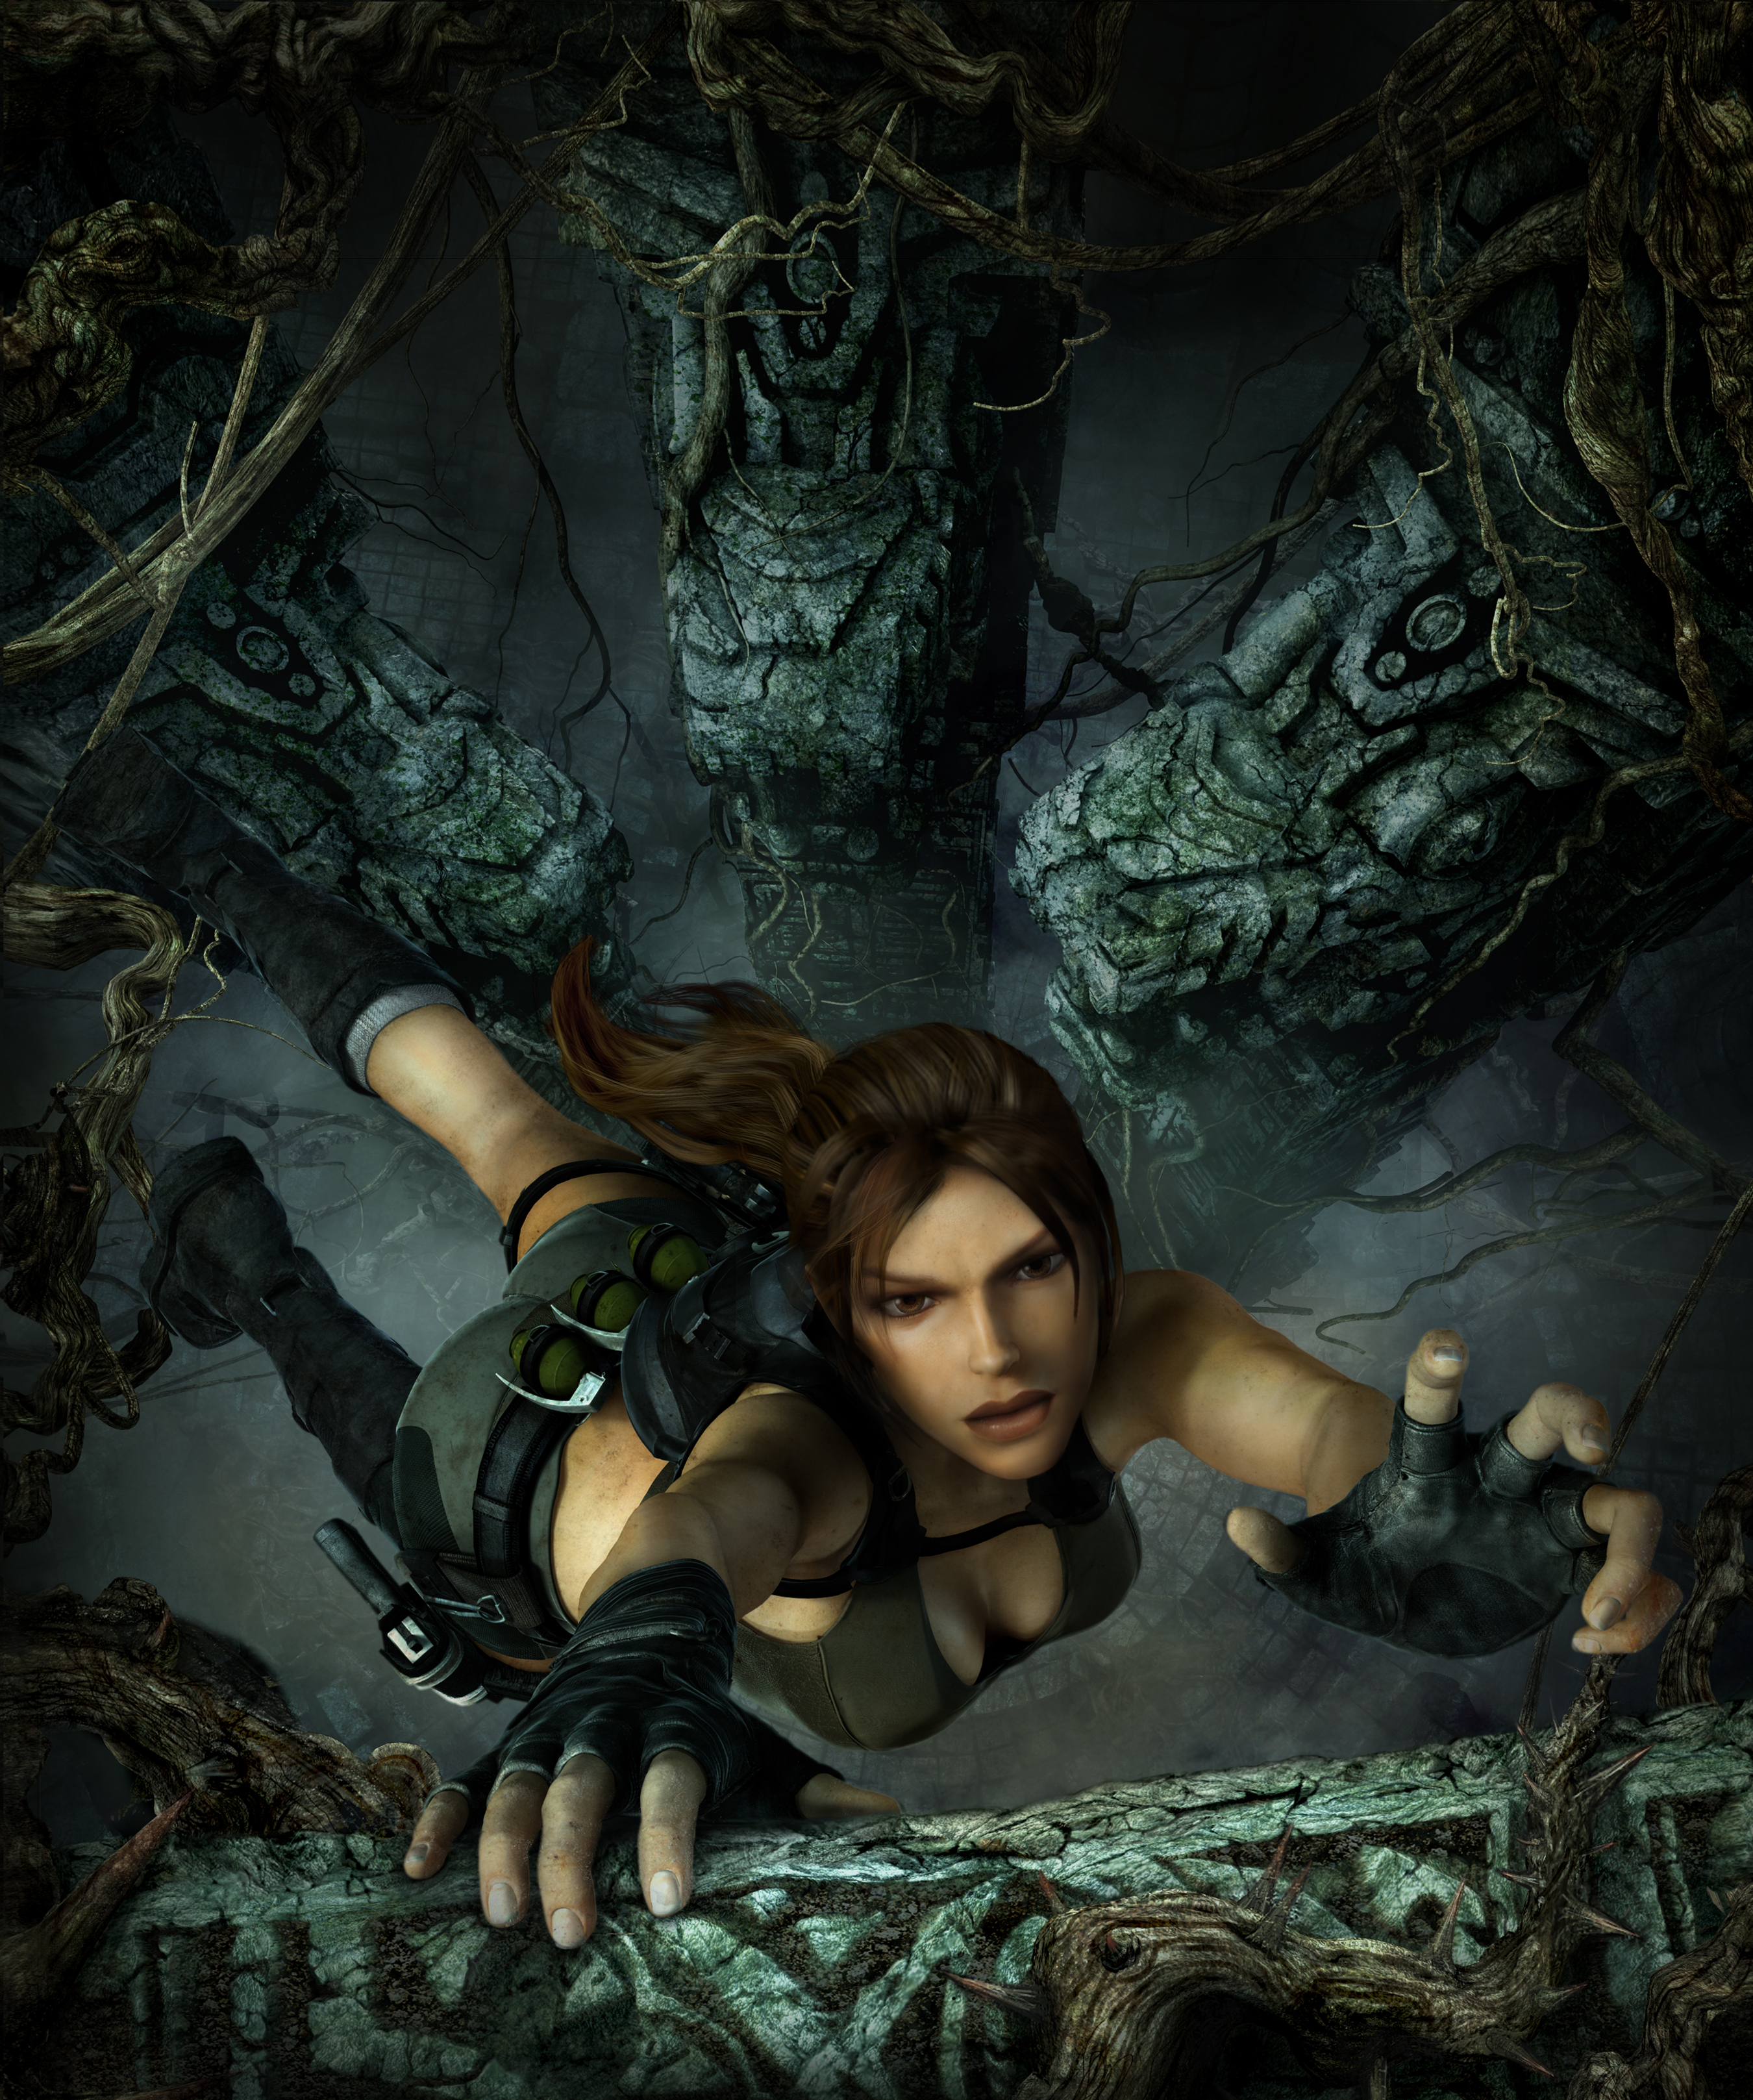 video games, Tomb Raider, Lara Croft - desktop wallpaper